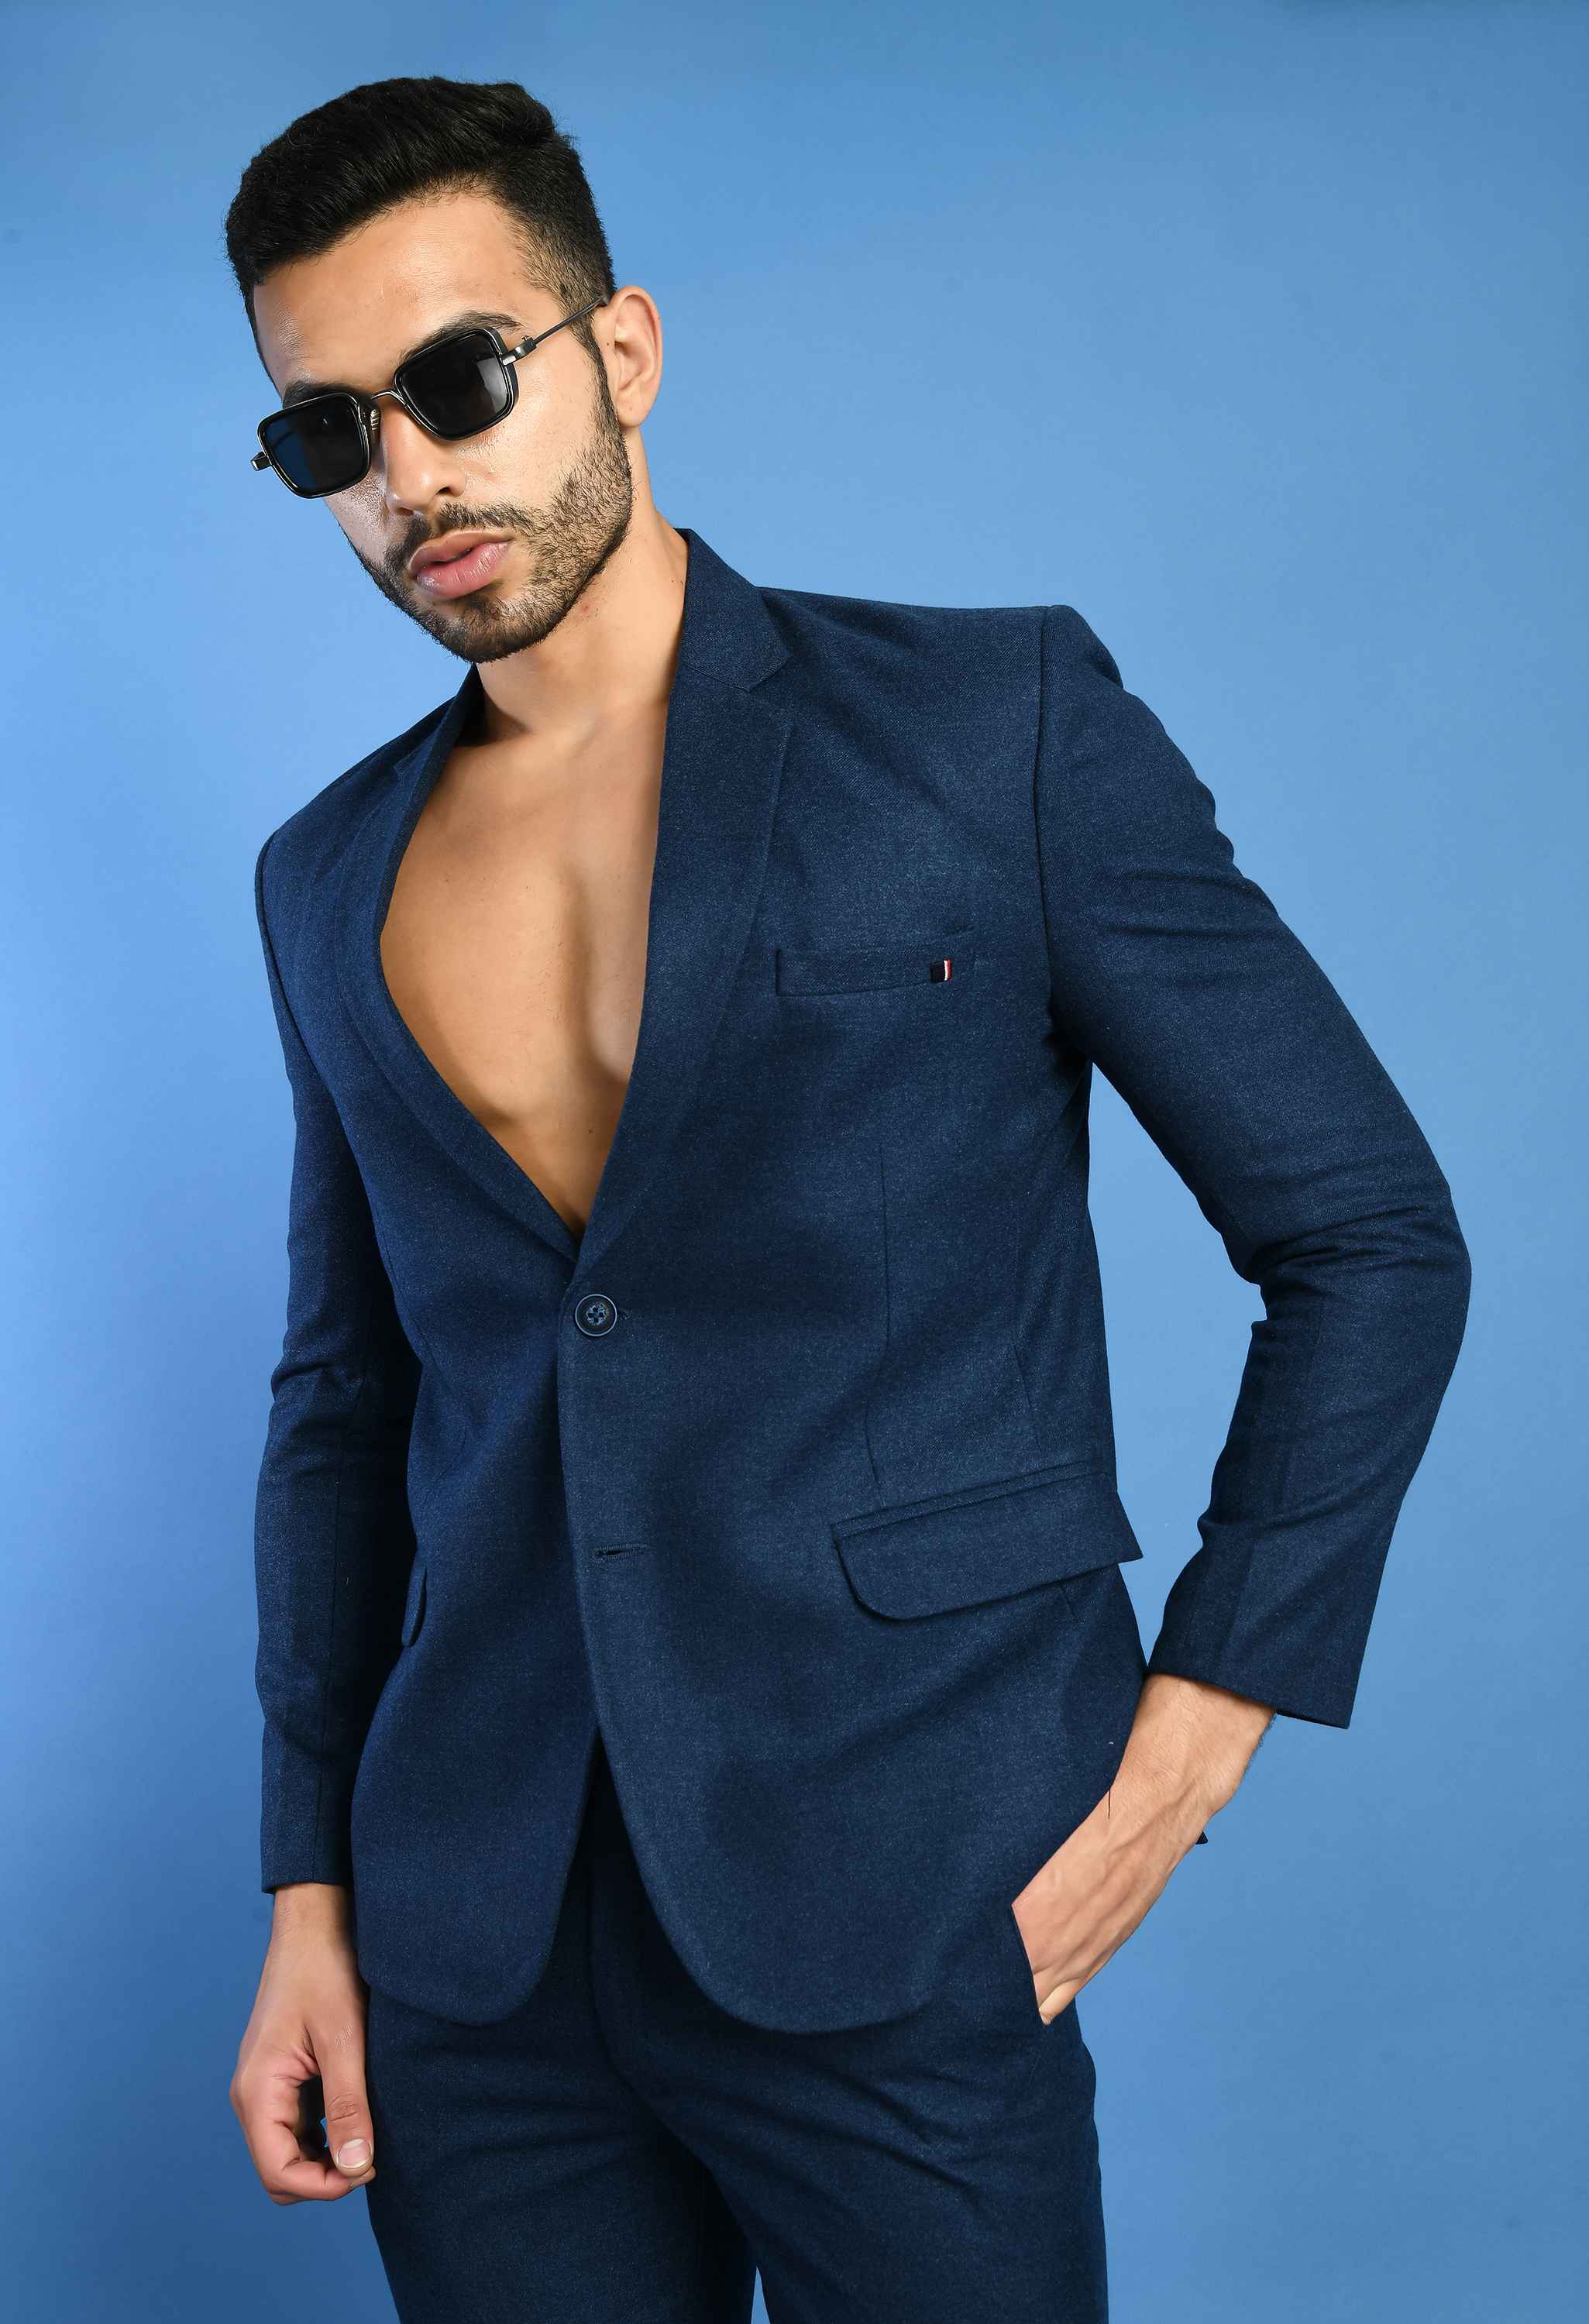 Men's Charming Navy Blue Suit Set - SQUIREHOOD